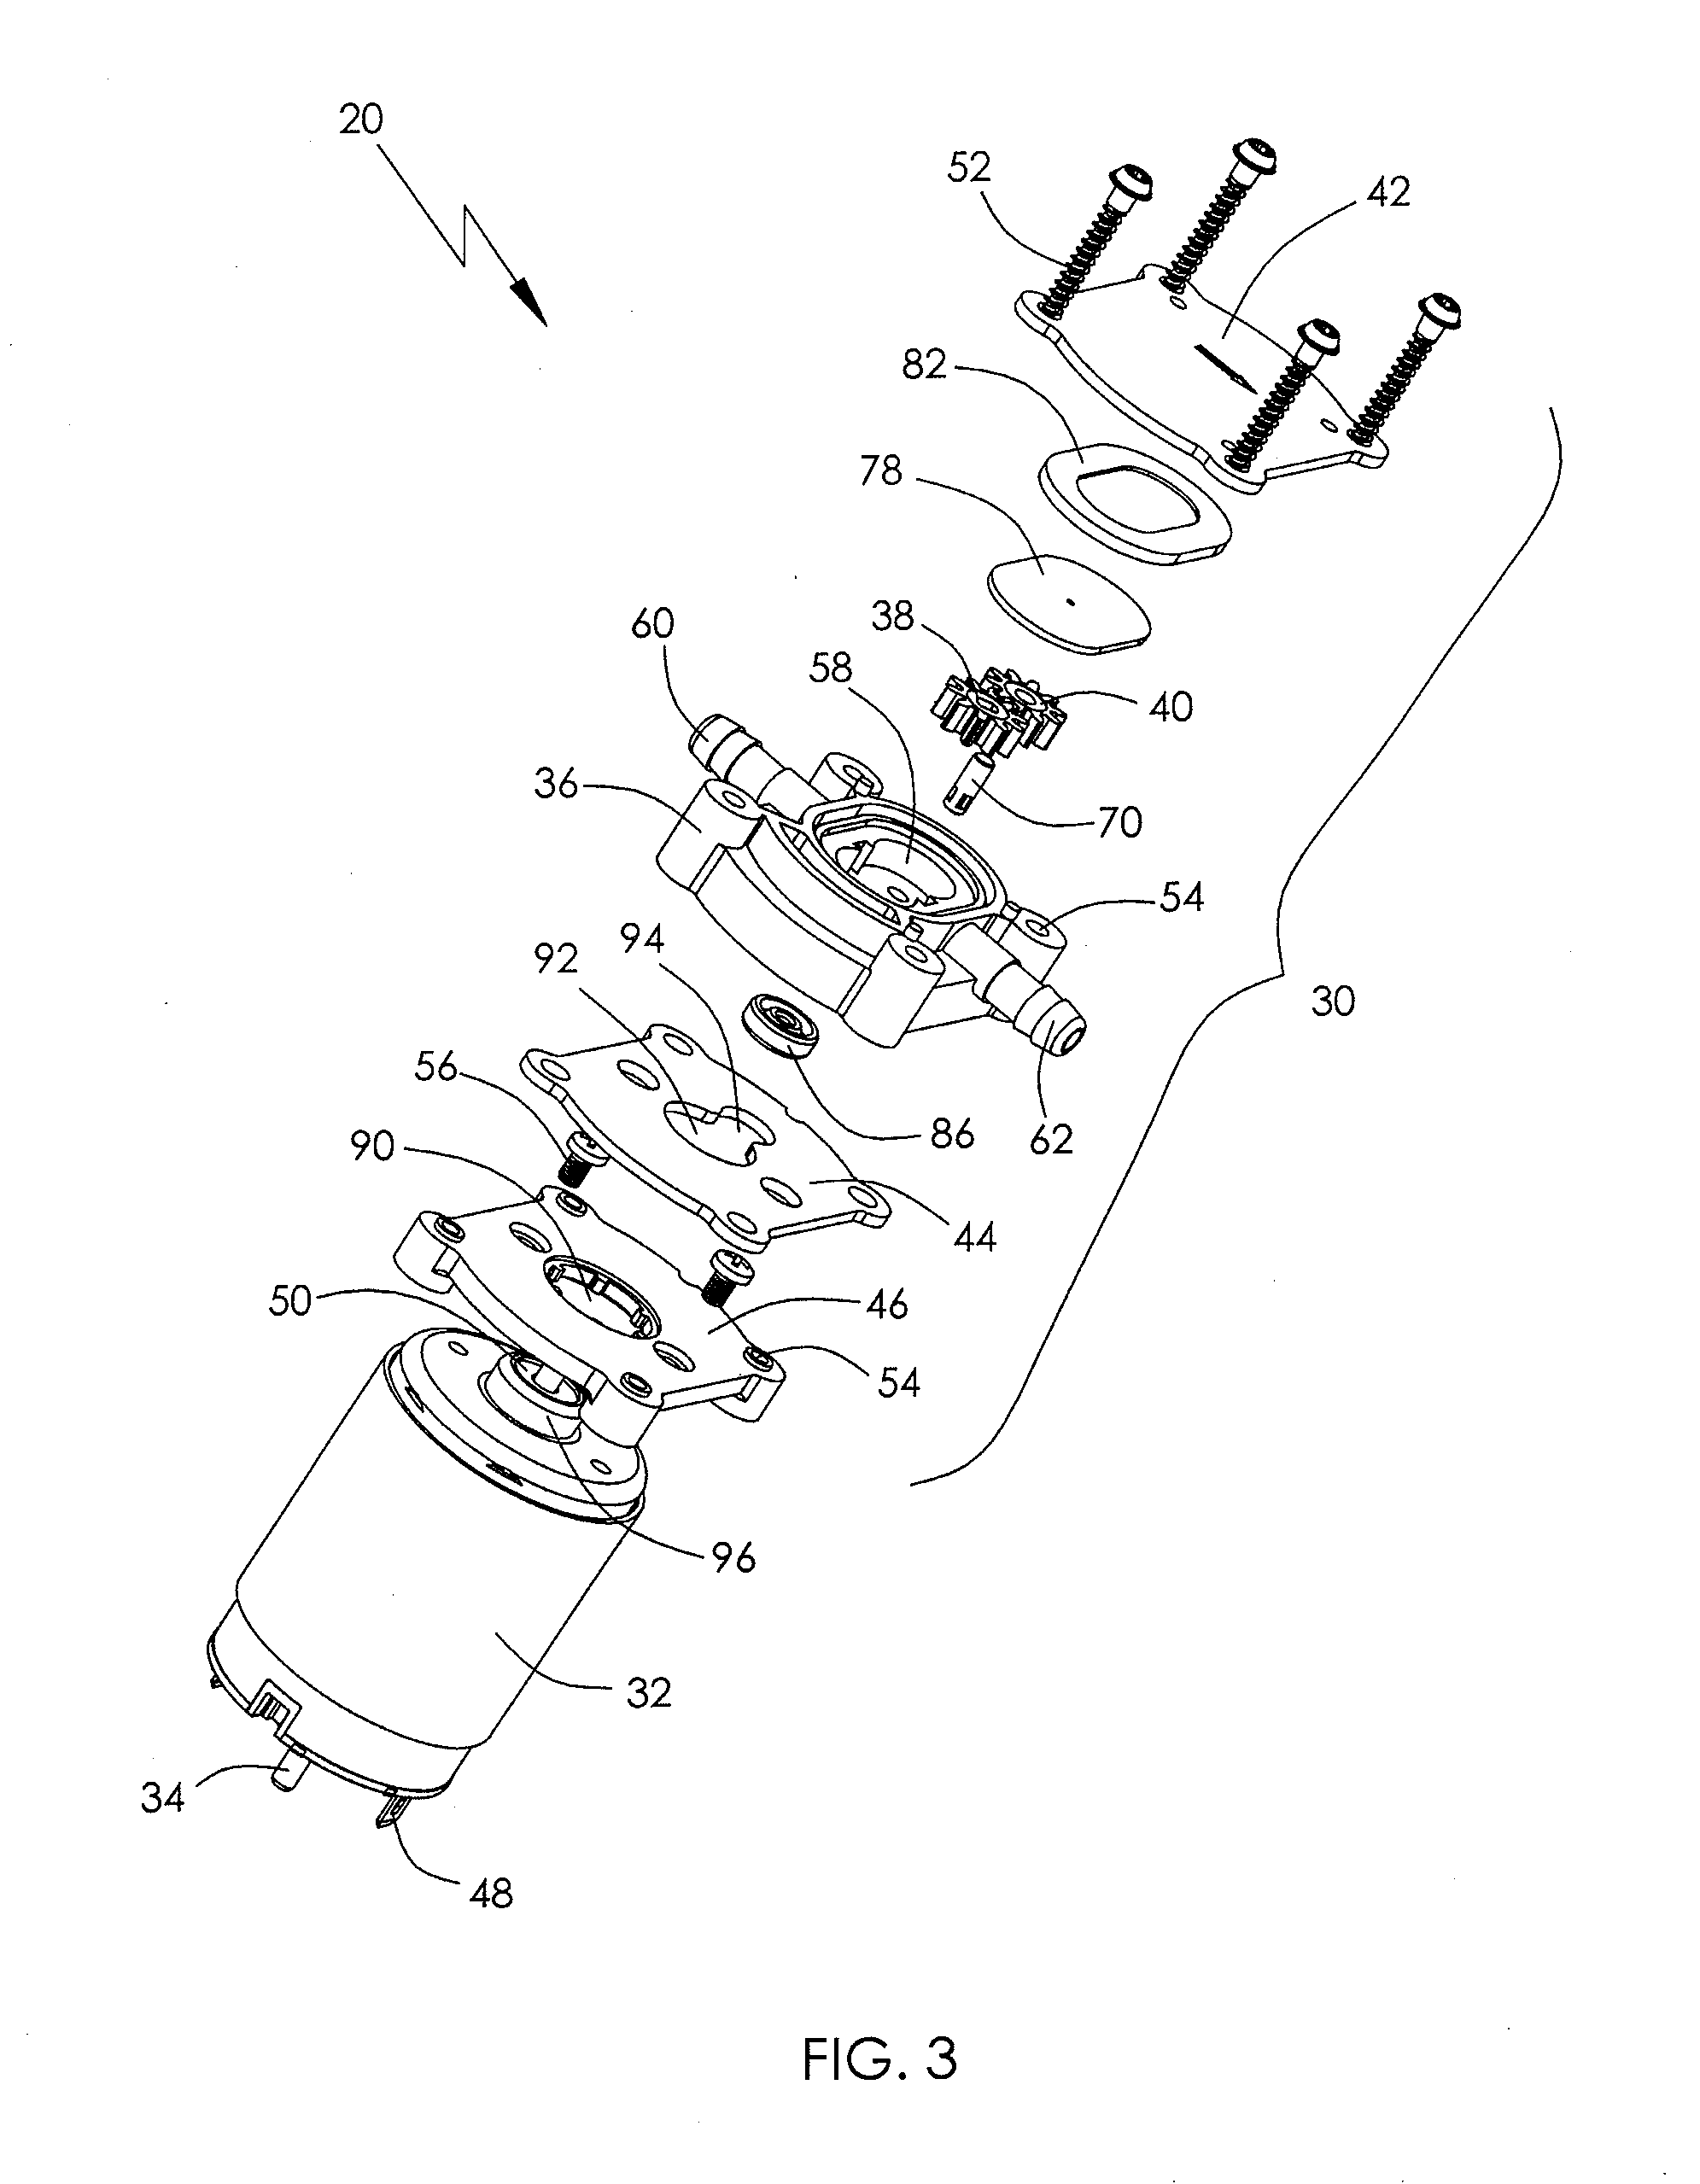 Liquid gear pump